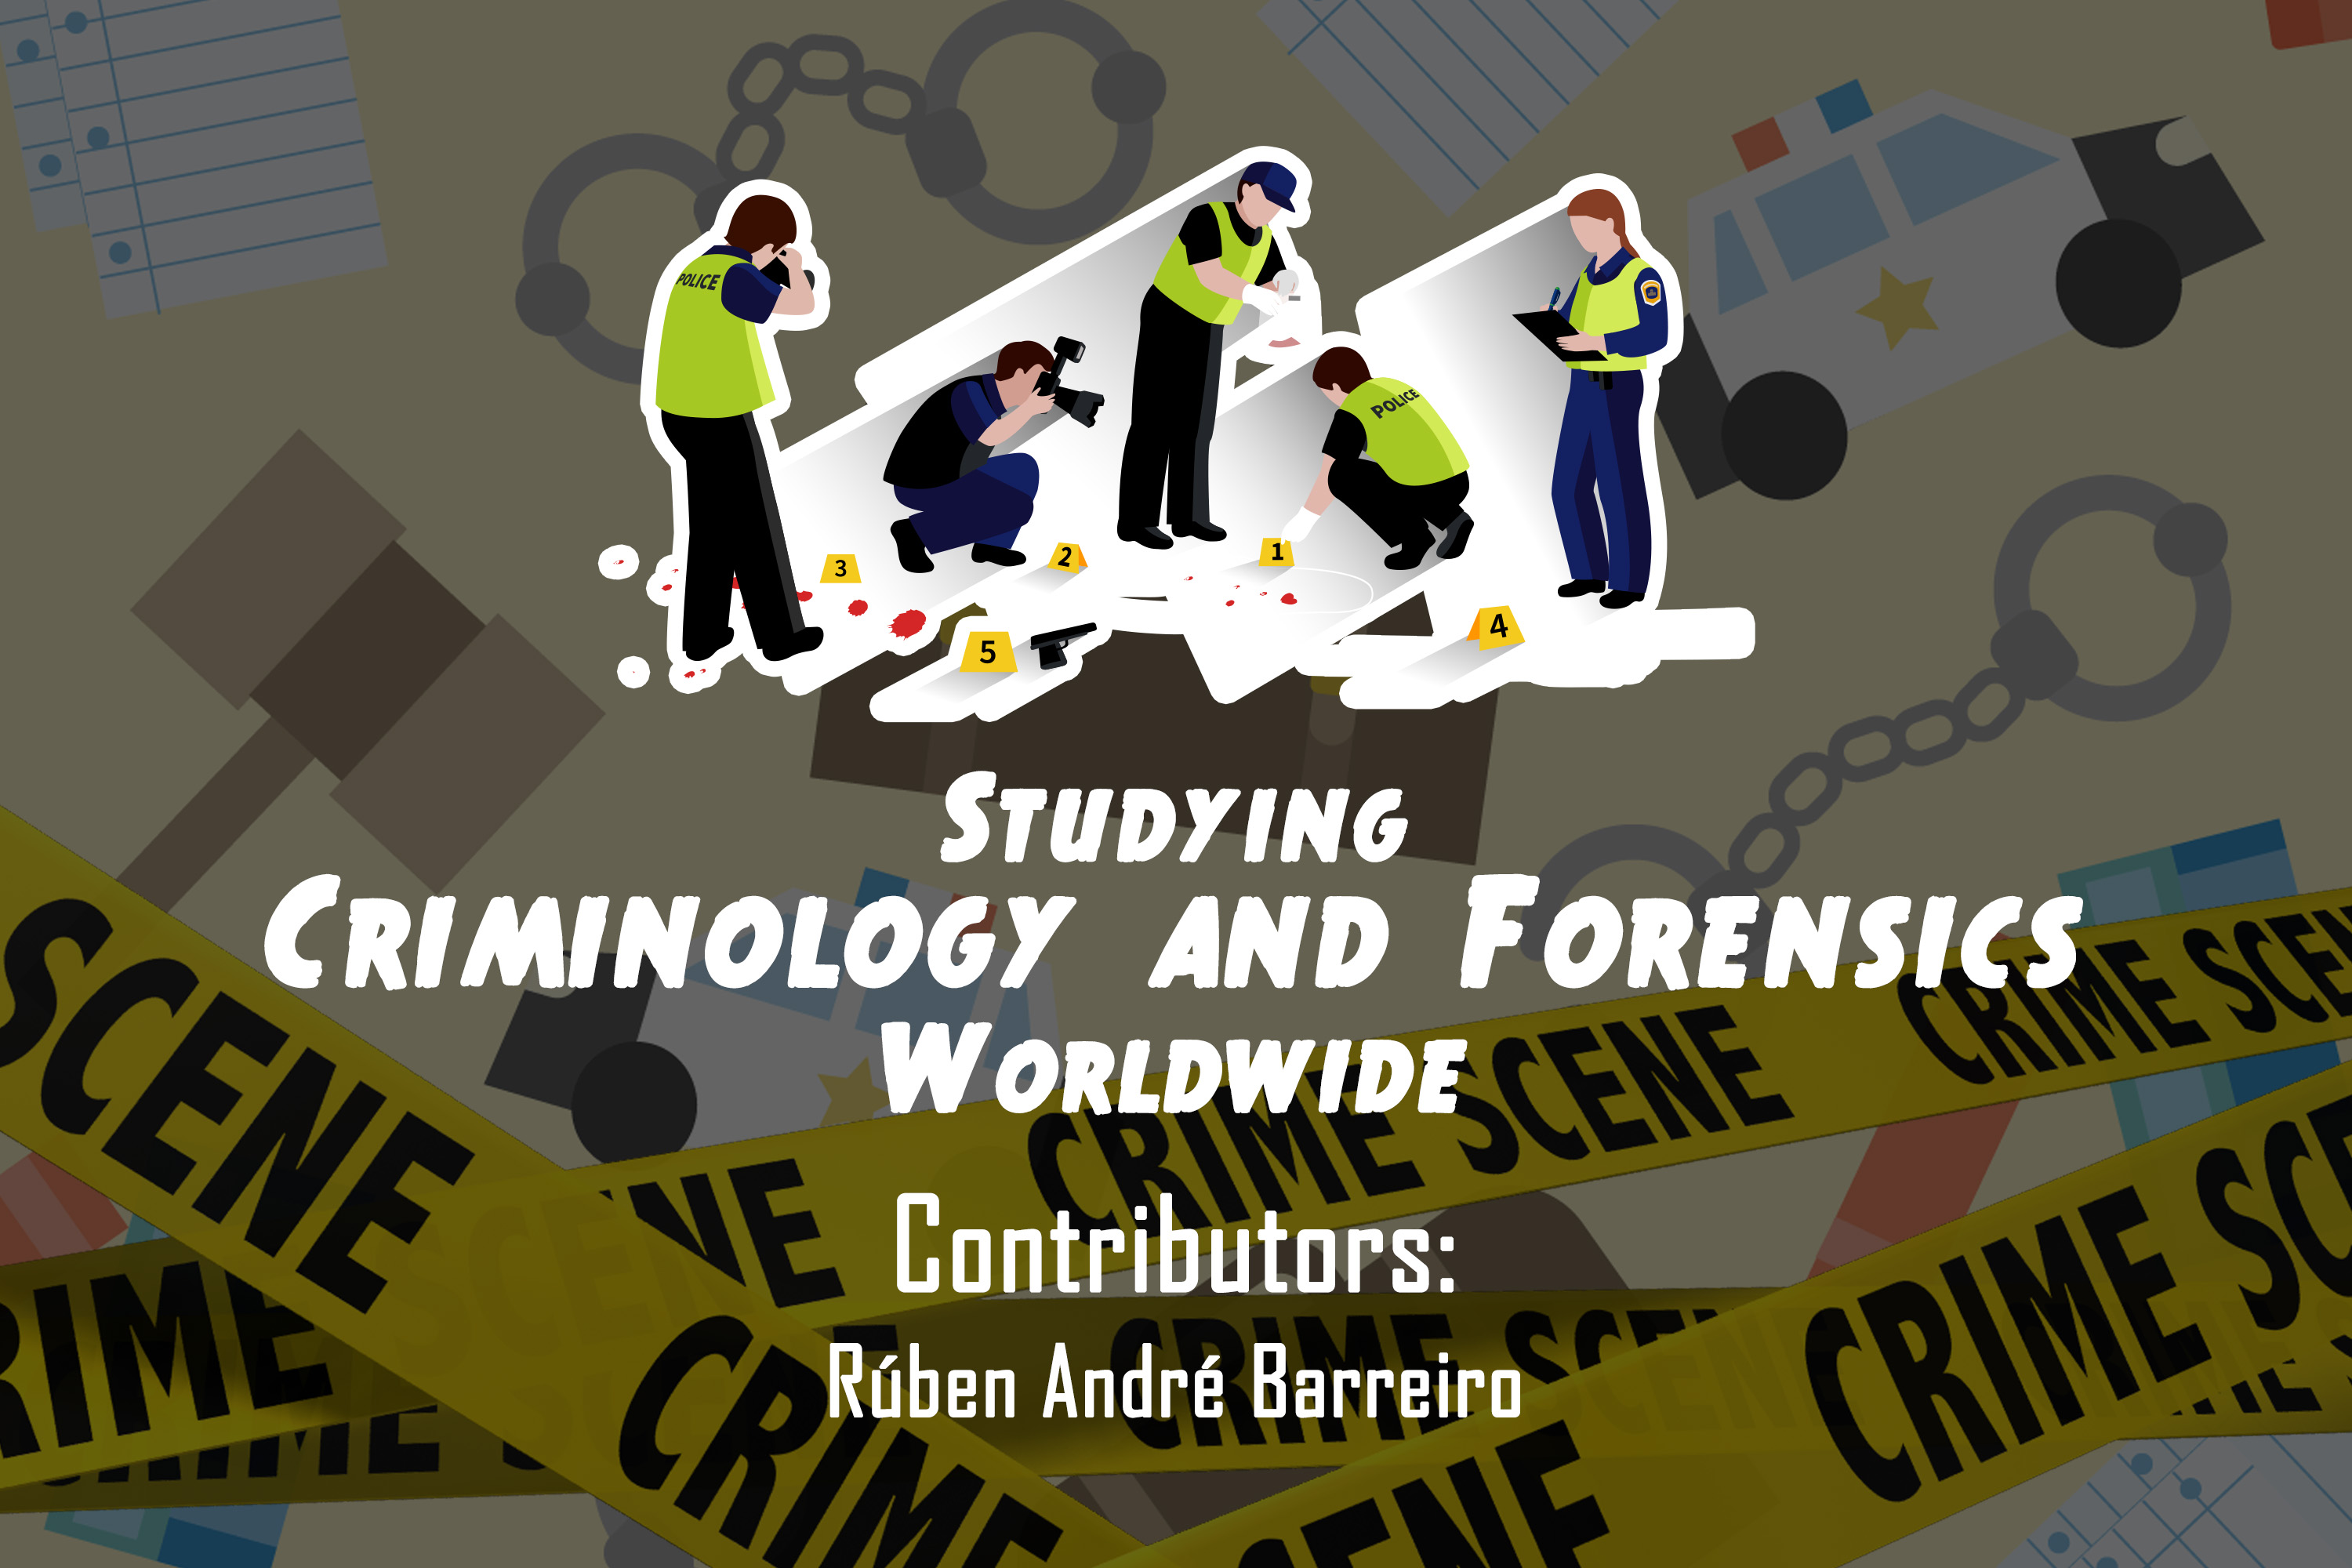 https://raw.githubusercontent.com/rubenandrebarreiro/studying-criminology-and-forensics-worldwide/master/imgs/JPGs/banner-1.jpg